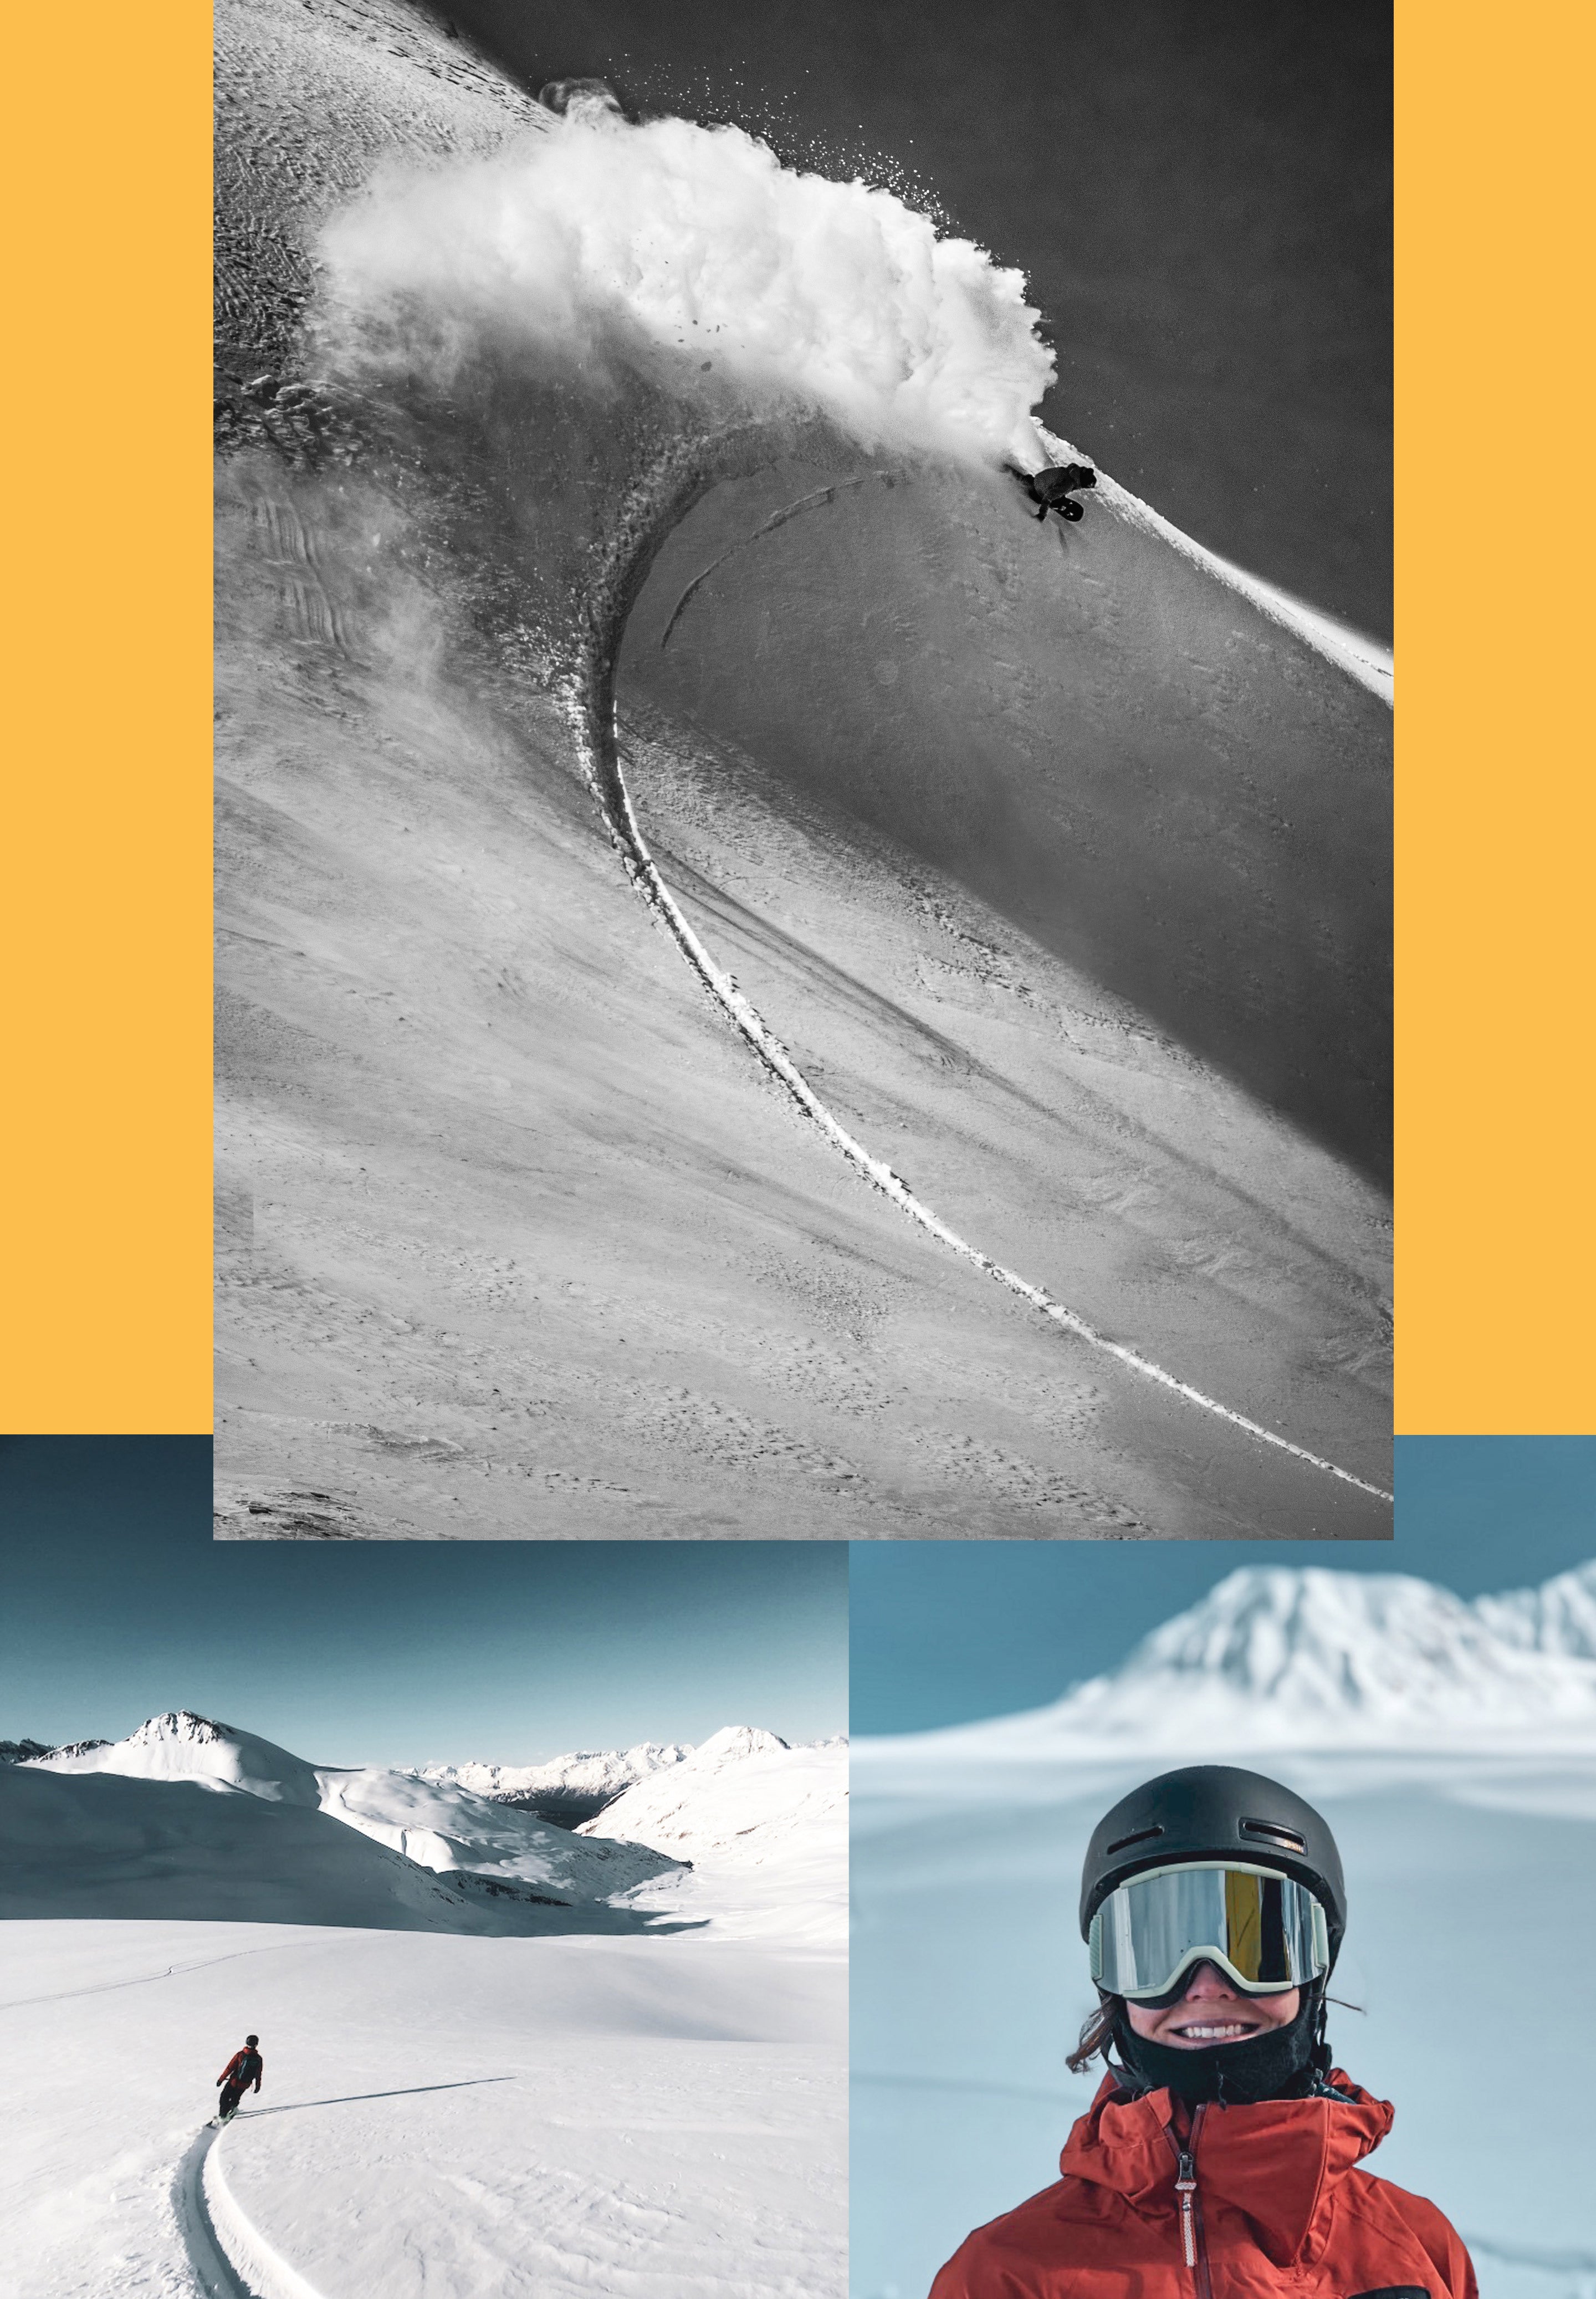 nexus snowboard – season